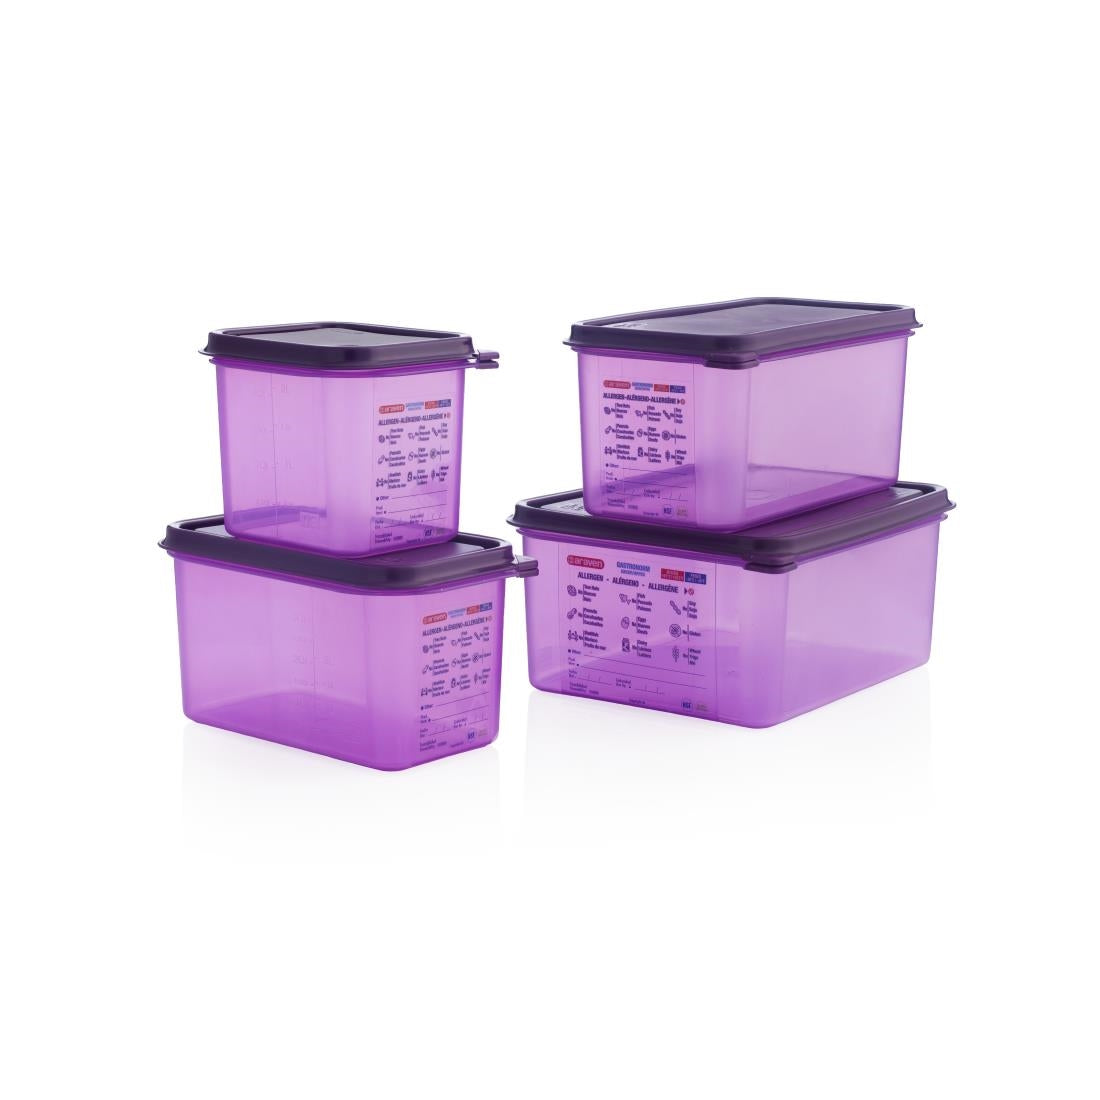 Araven Allergen Polypropylene 1/4 Gastronorm Food Storage Container Purple 4.3L JD Catering Equipment Solutions Ltd